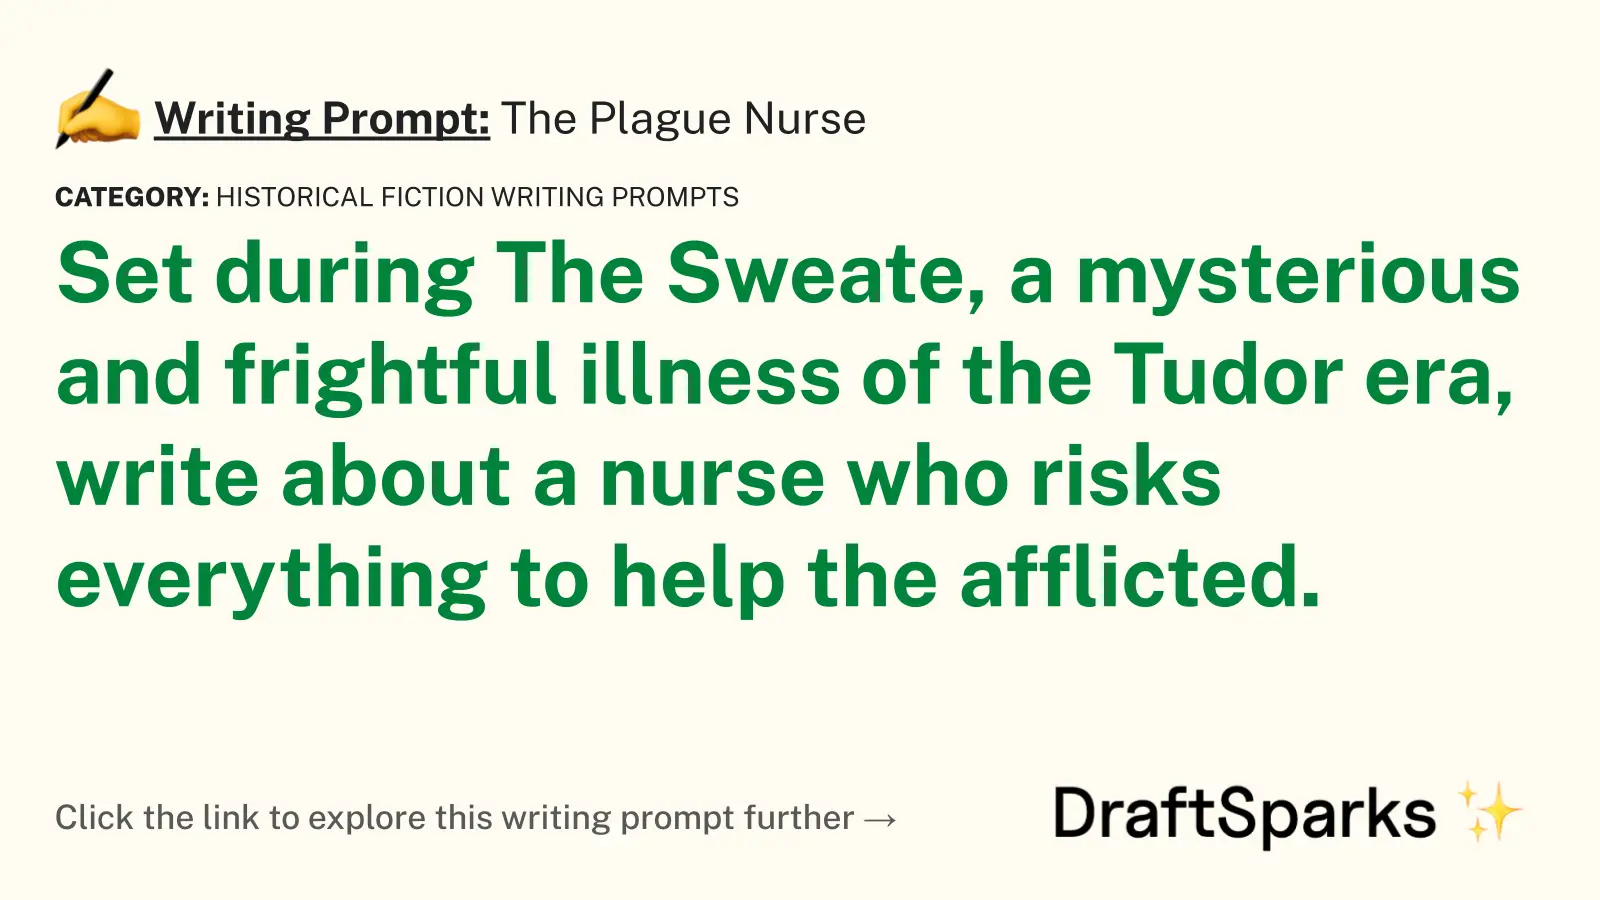 The Plague Nurse